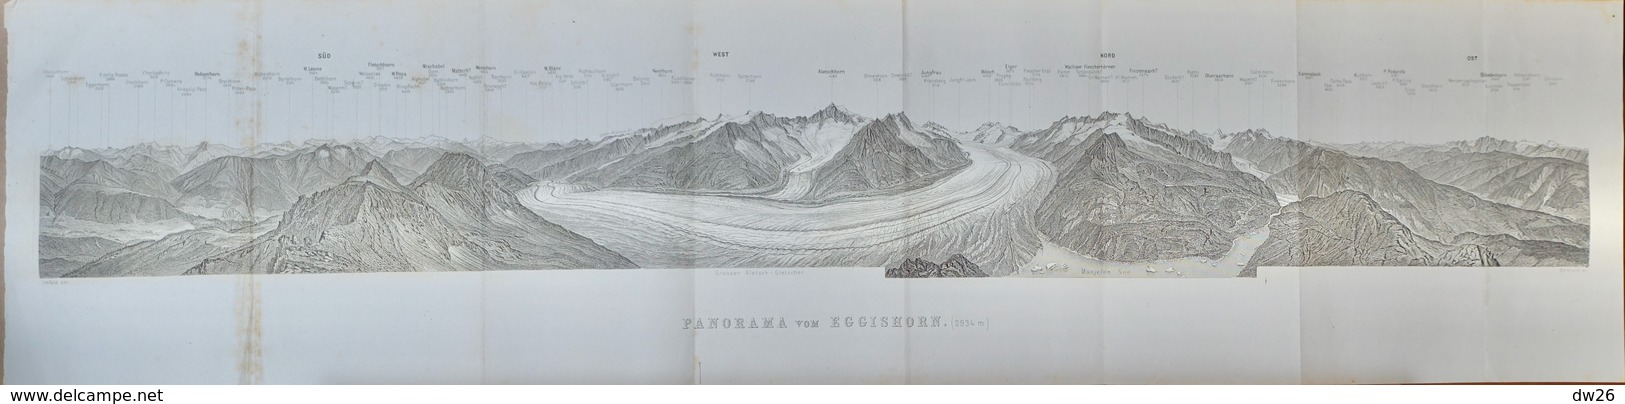 Carte Géographique: Suisse, Panorama Vom Eggishorn (Grosser Aletsch, Gletscher) - Cartes Géographiques